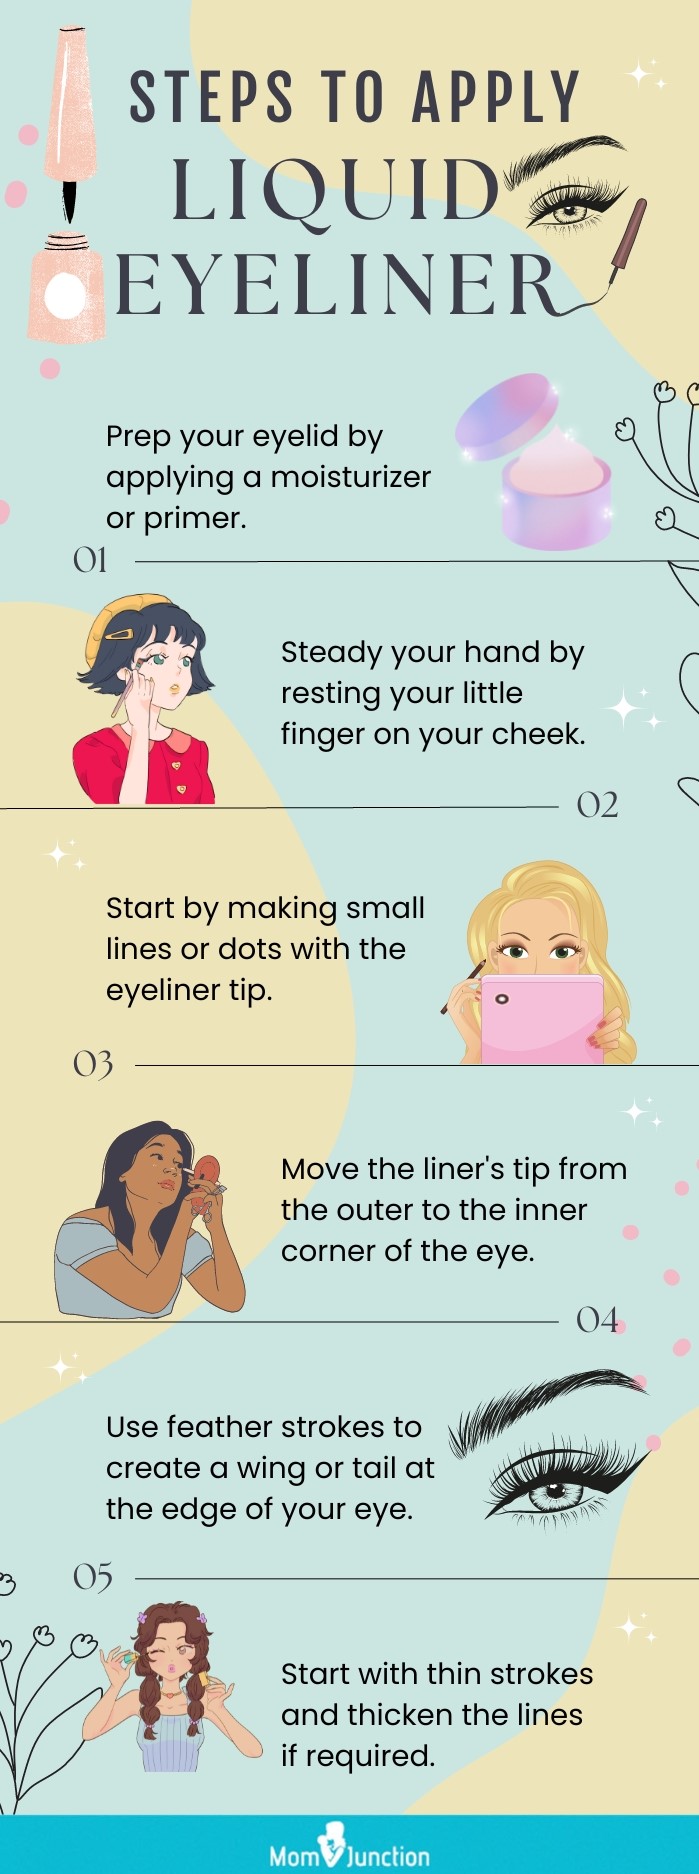 Steps to apply liquid eyeliner